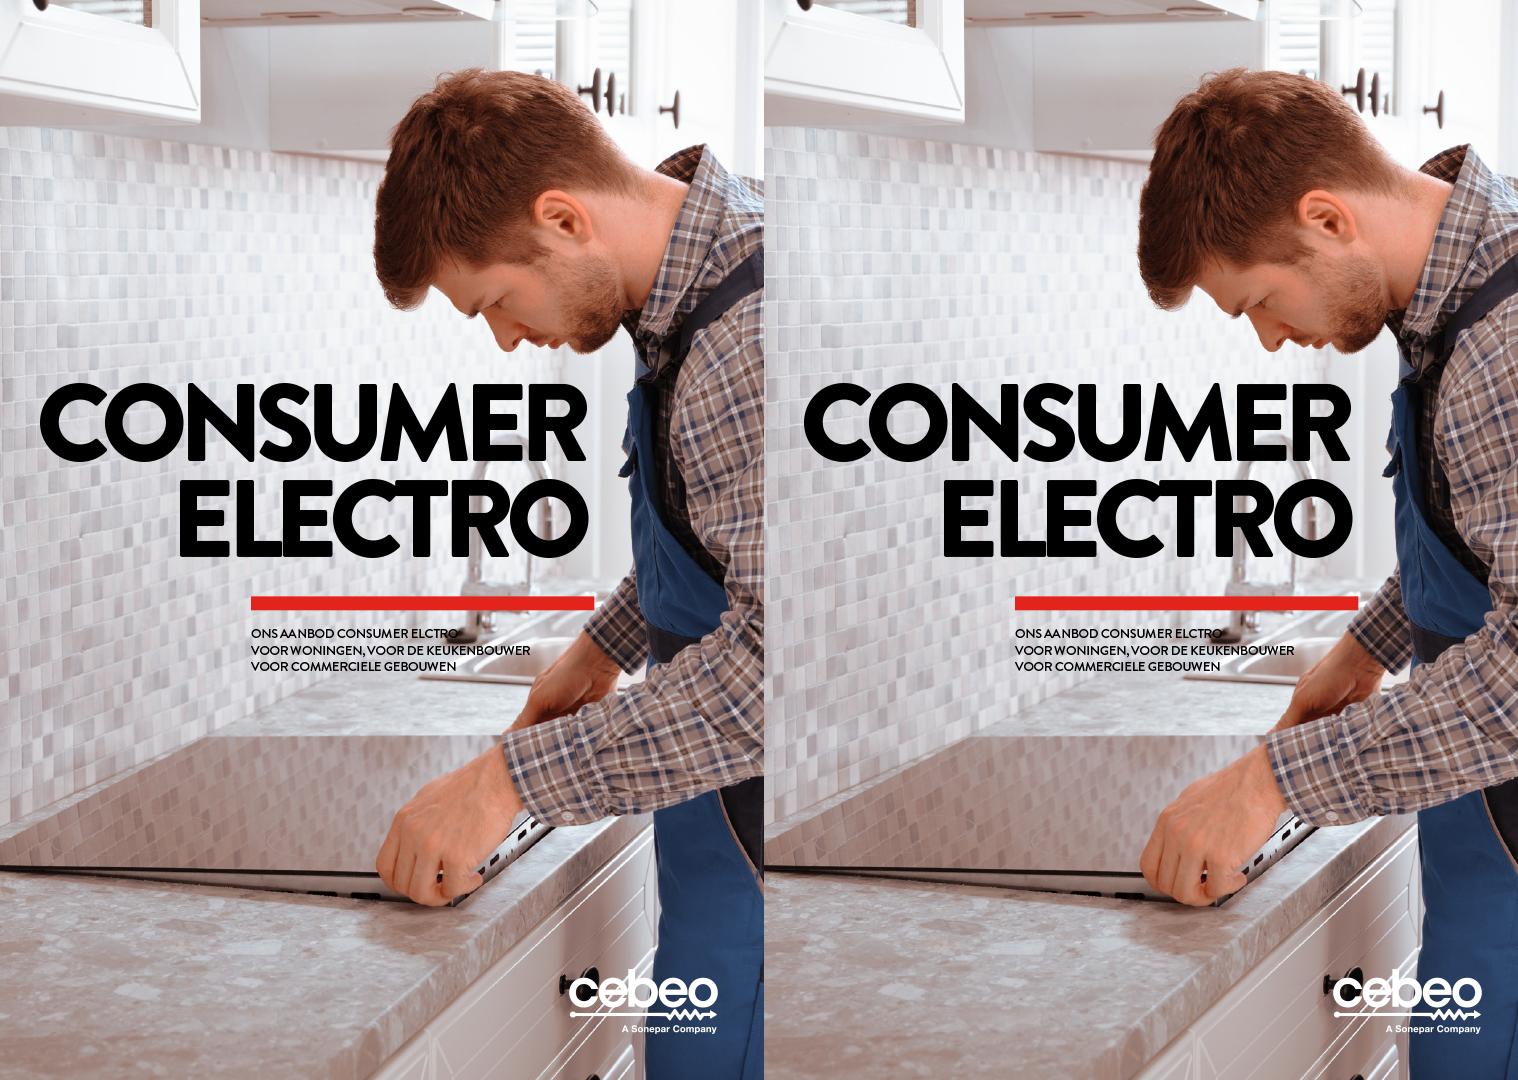 Consumer Electro: keukenbouwers